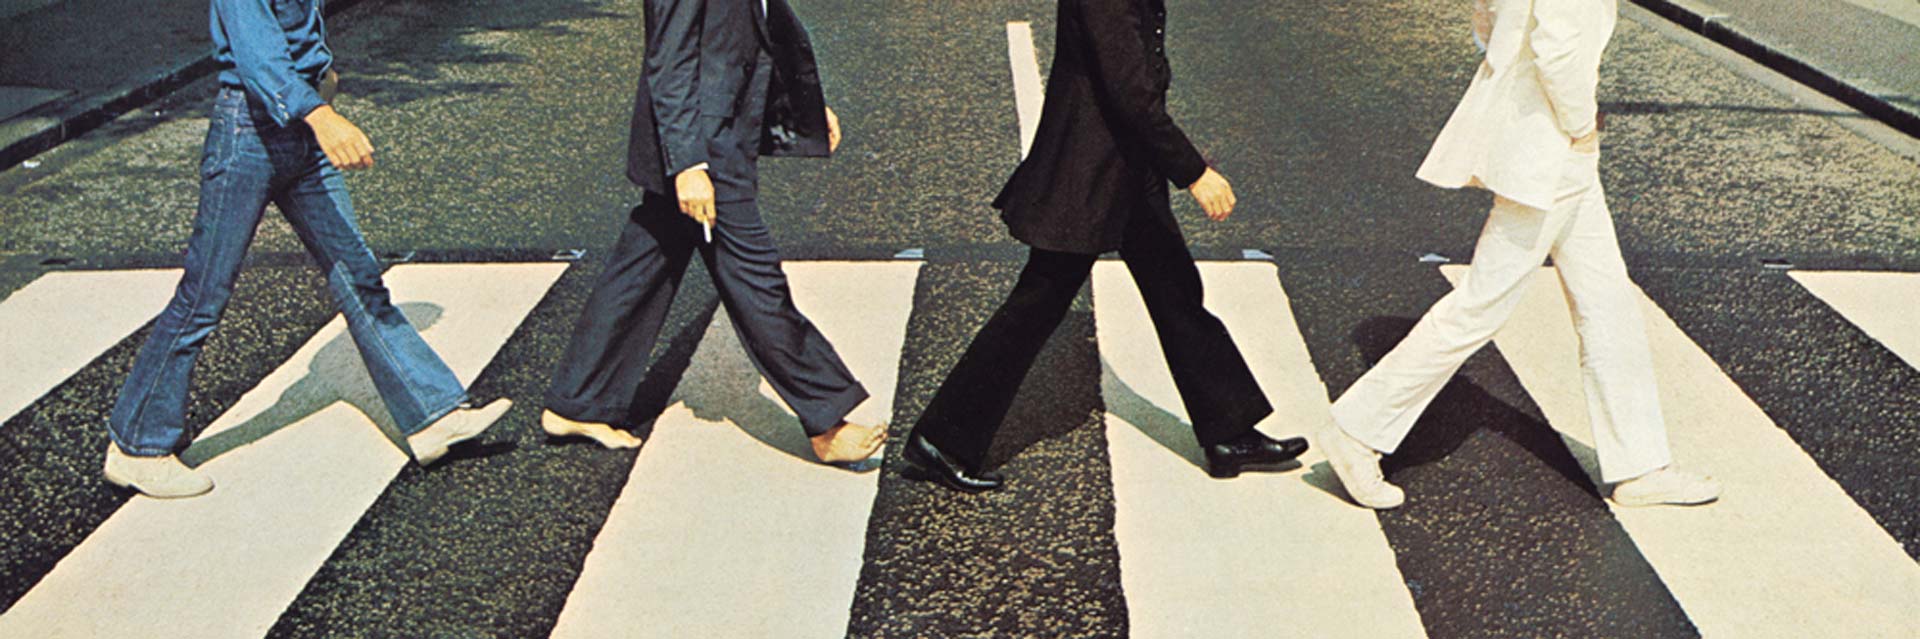 Beatles 1969